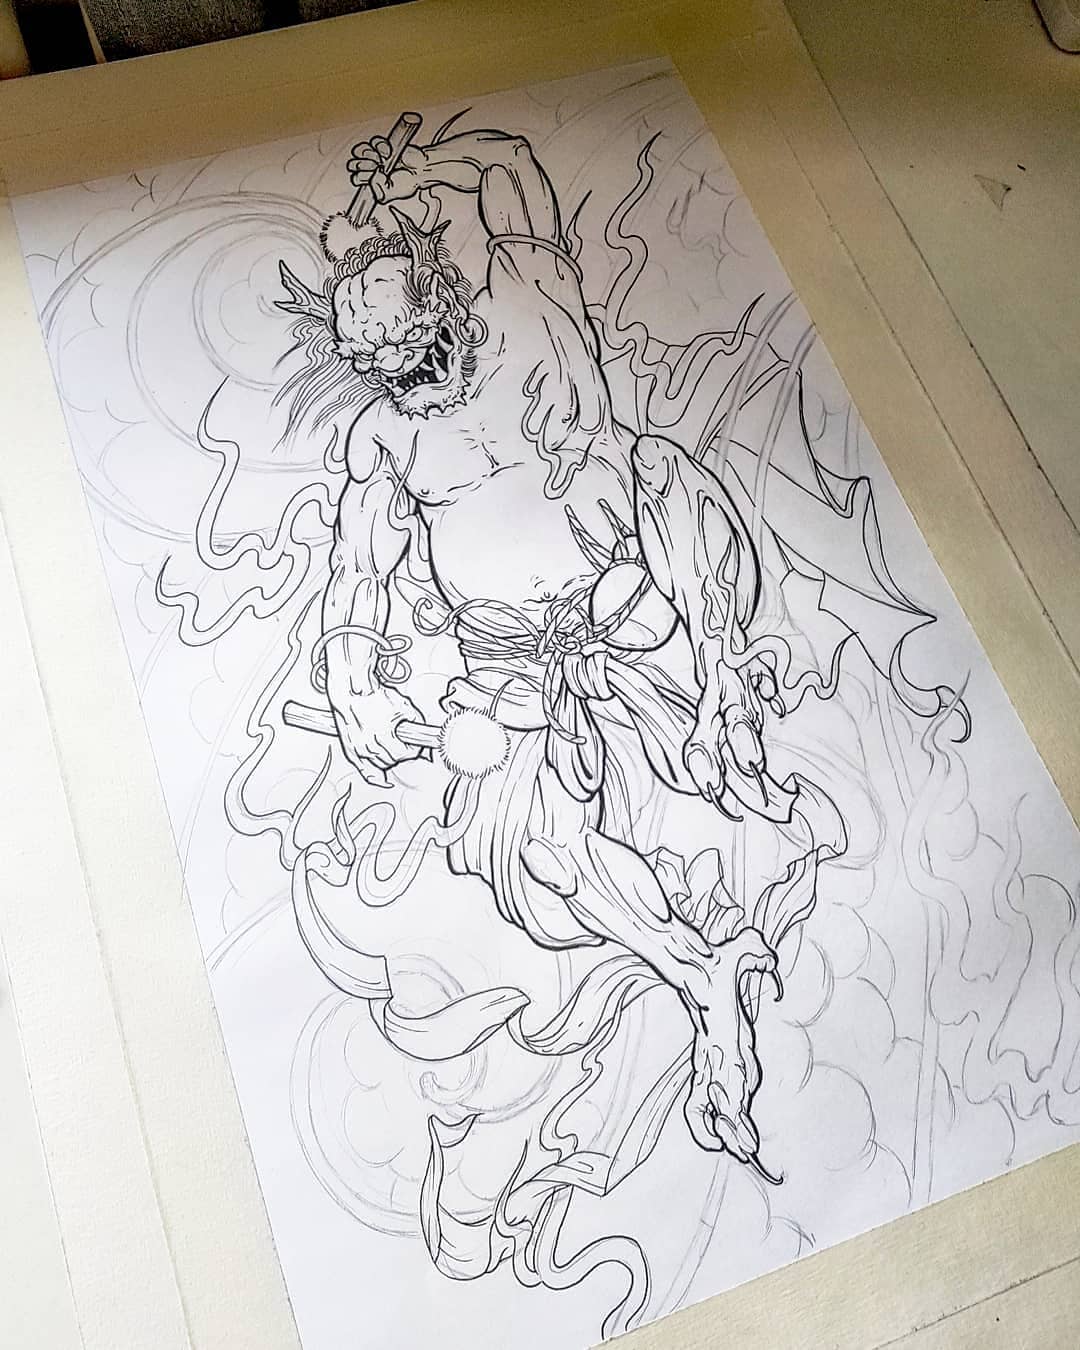 been enjoying these drawings lately
-
#reijin #oni #demon #irezumi #tattooprint